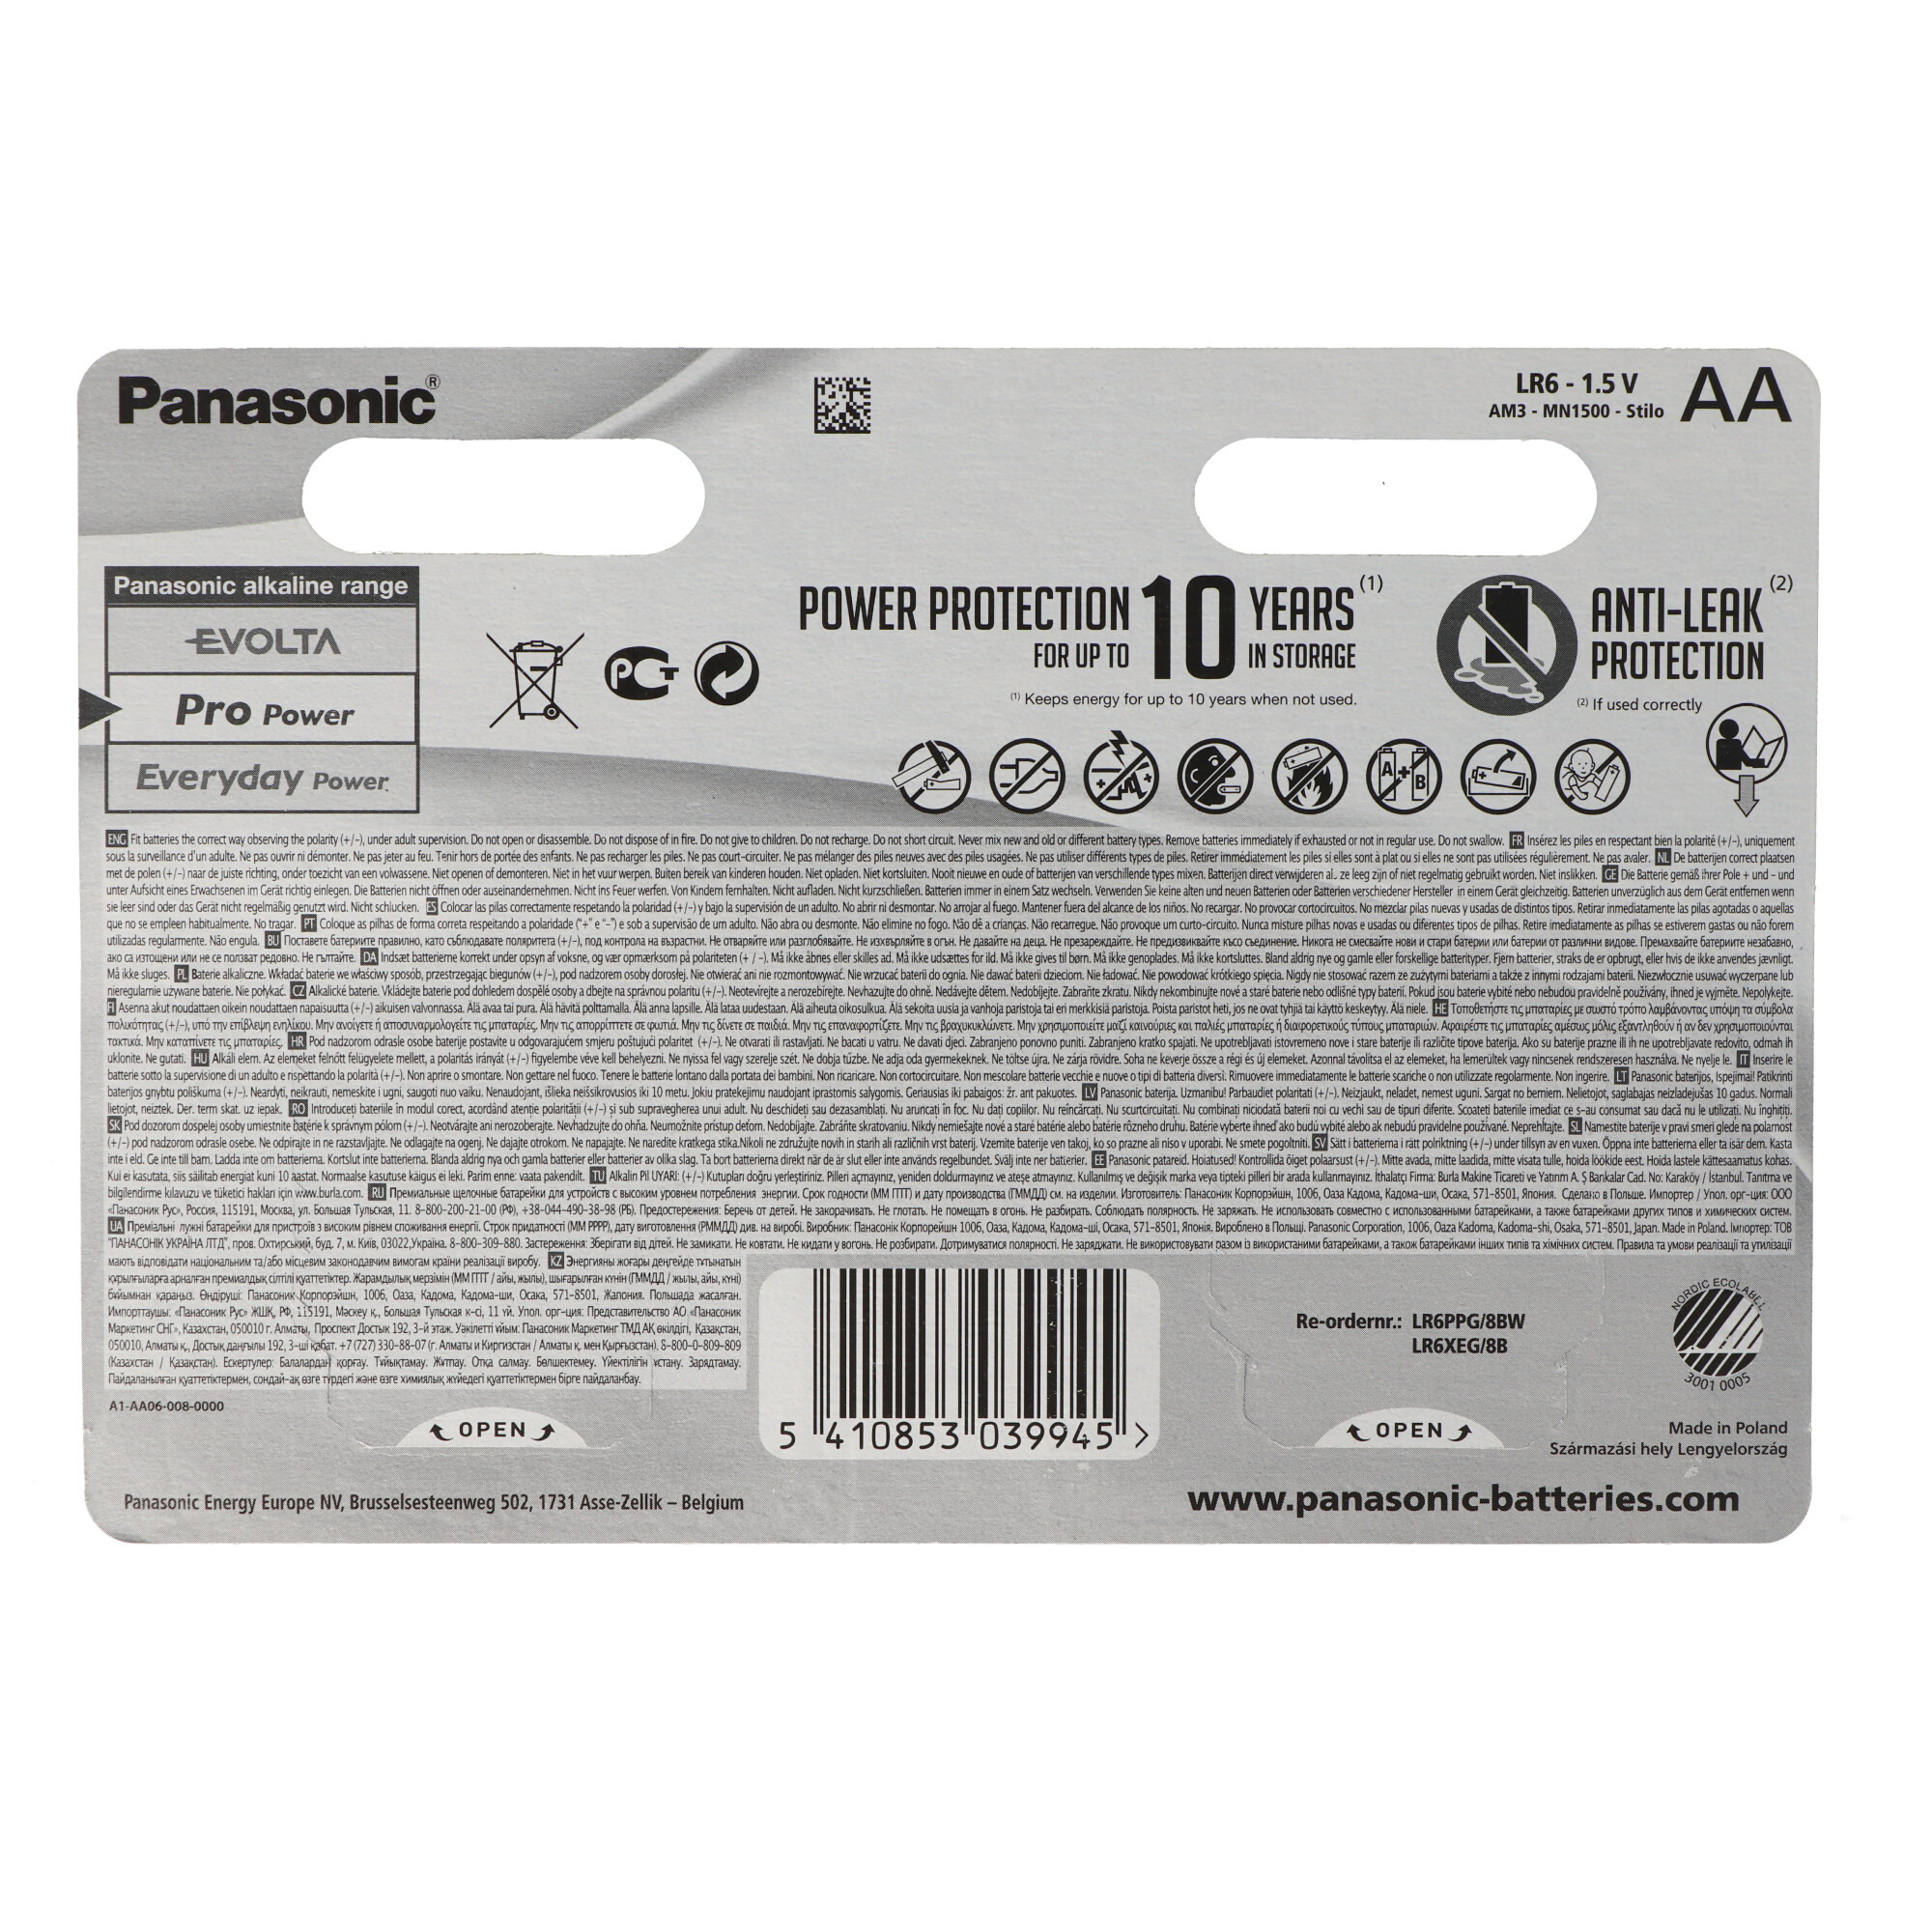 Panasonic Pro Power Mignon LR6 AA im 8er Pack